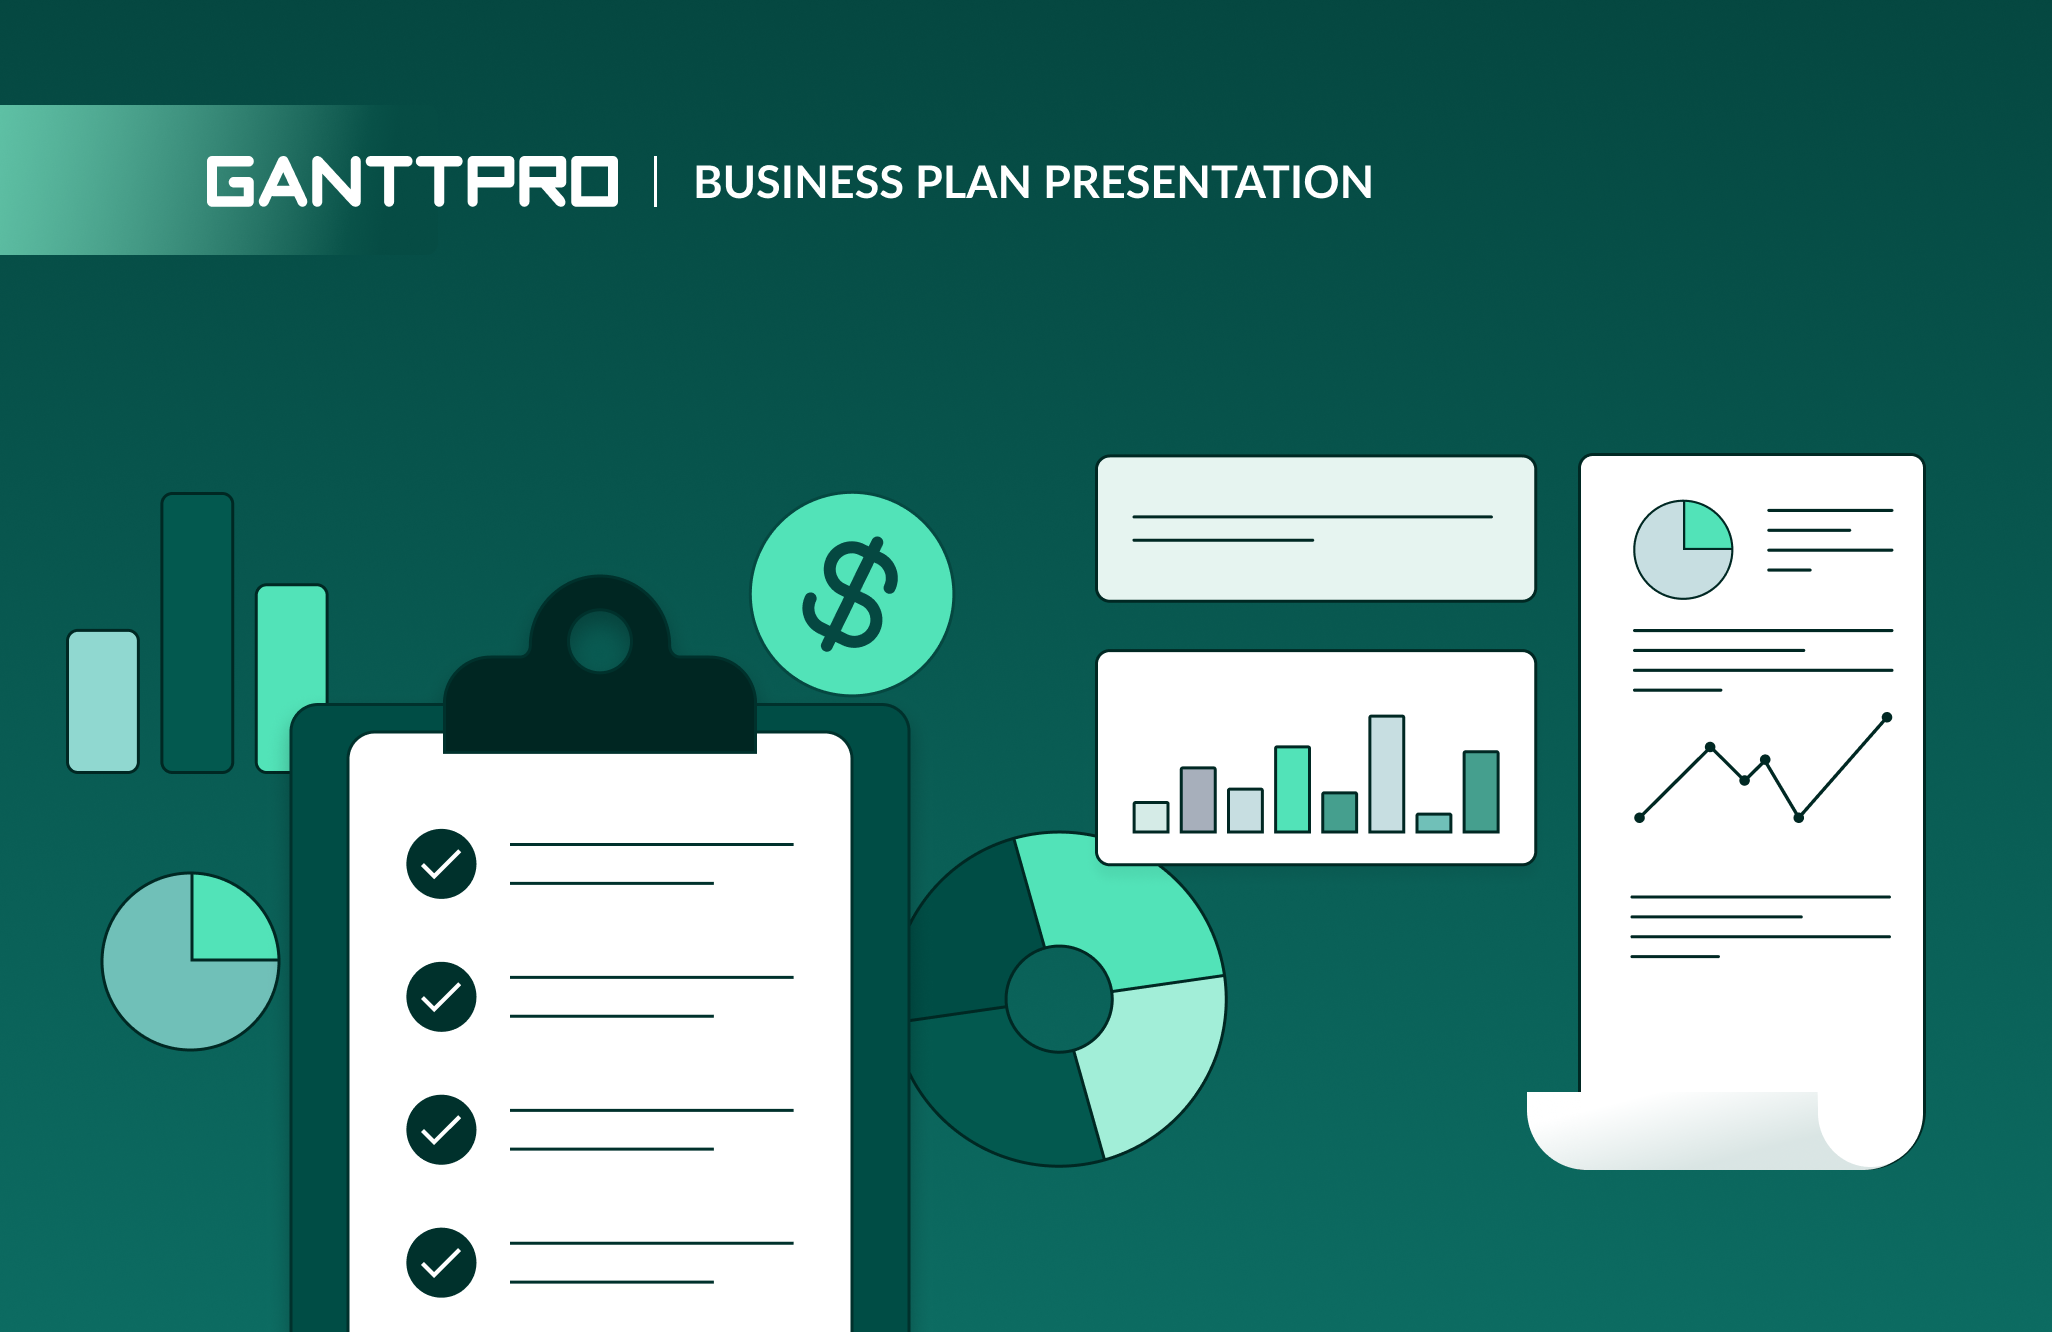 Creating a business plan presentation